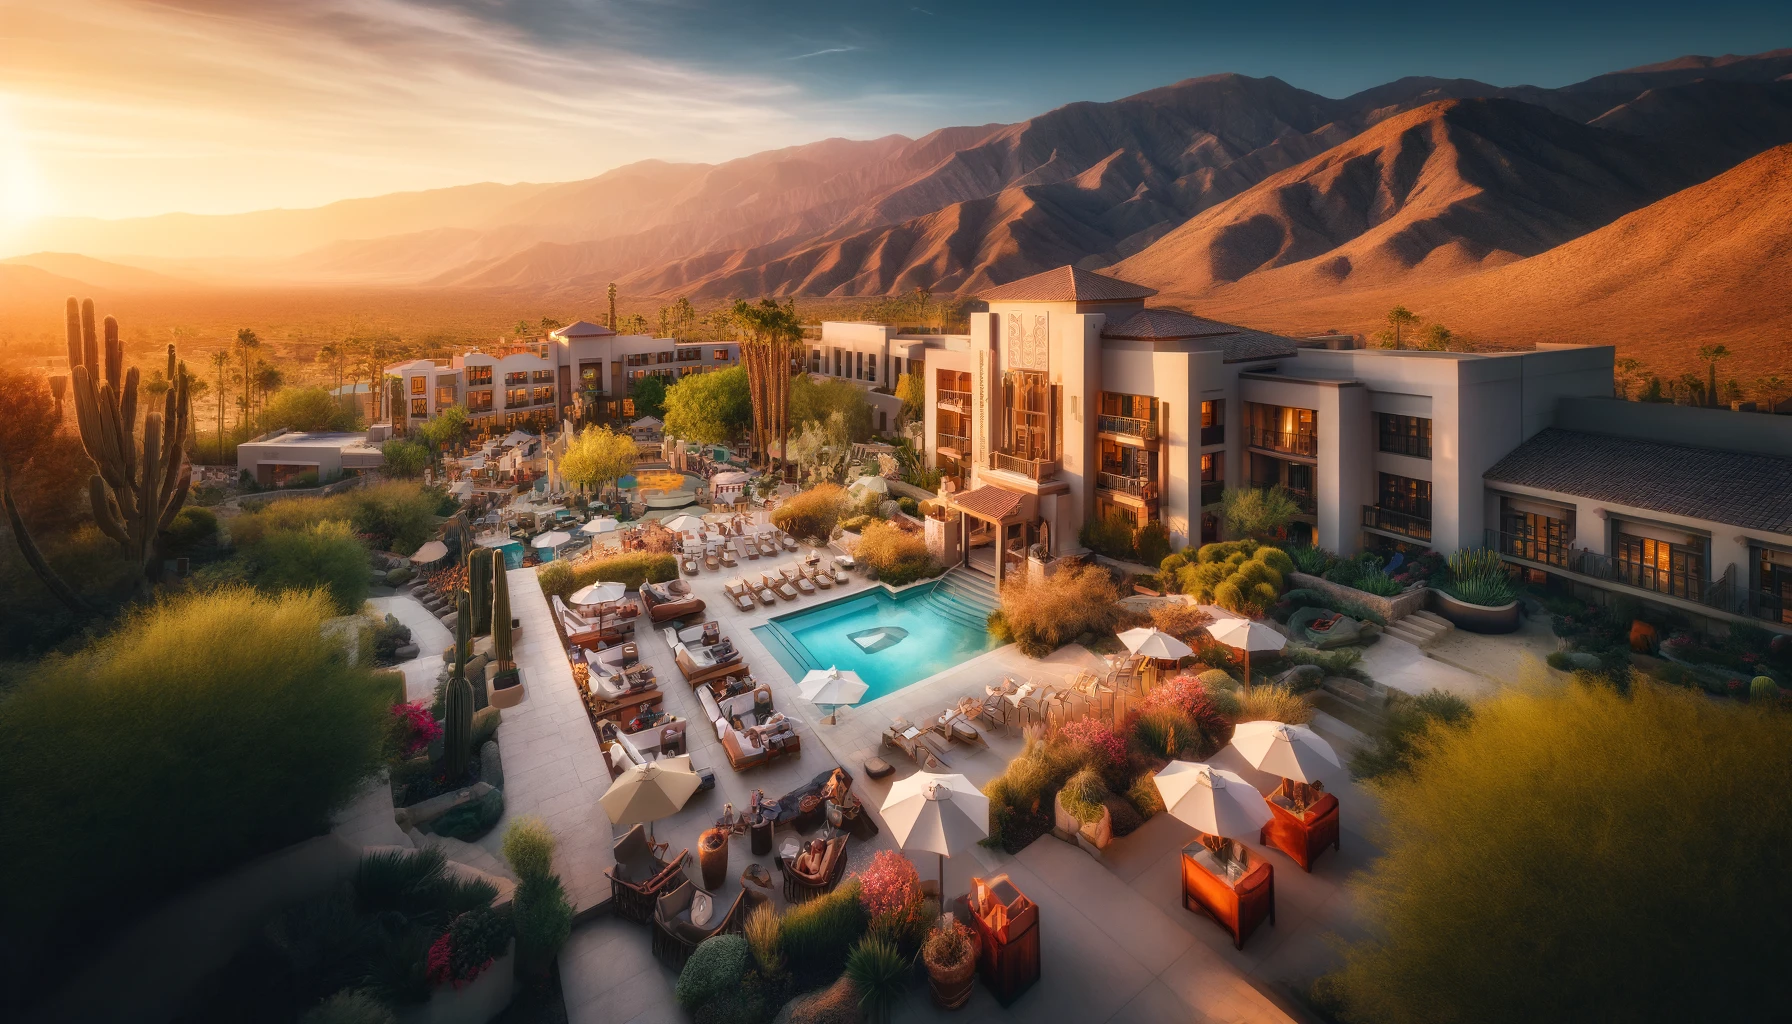 Borrego Springs Luxury Vacation | Exclusive Getaways in Desert Paradise